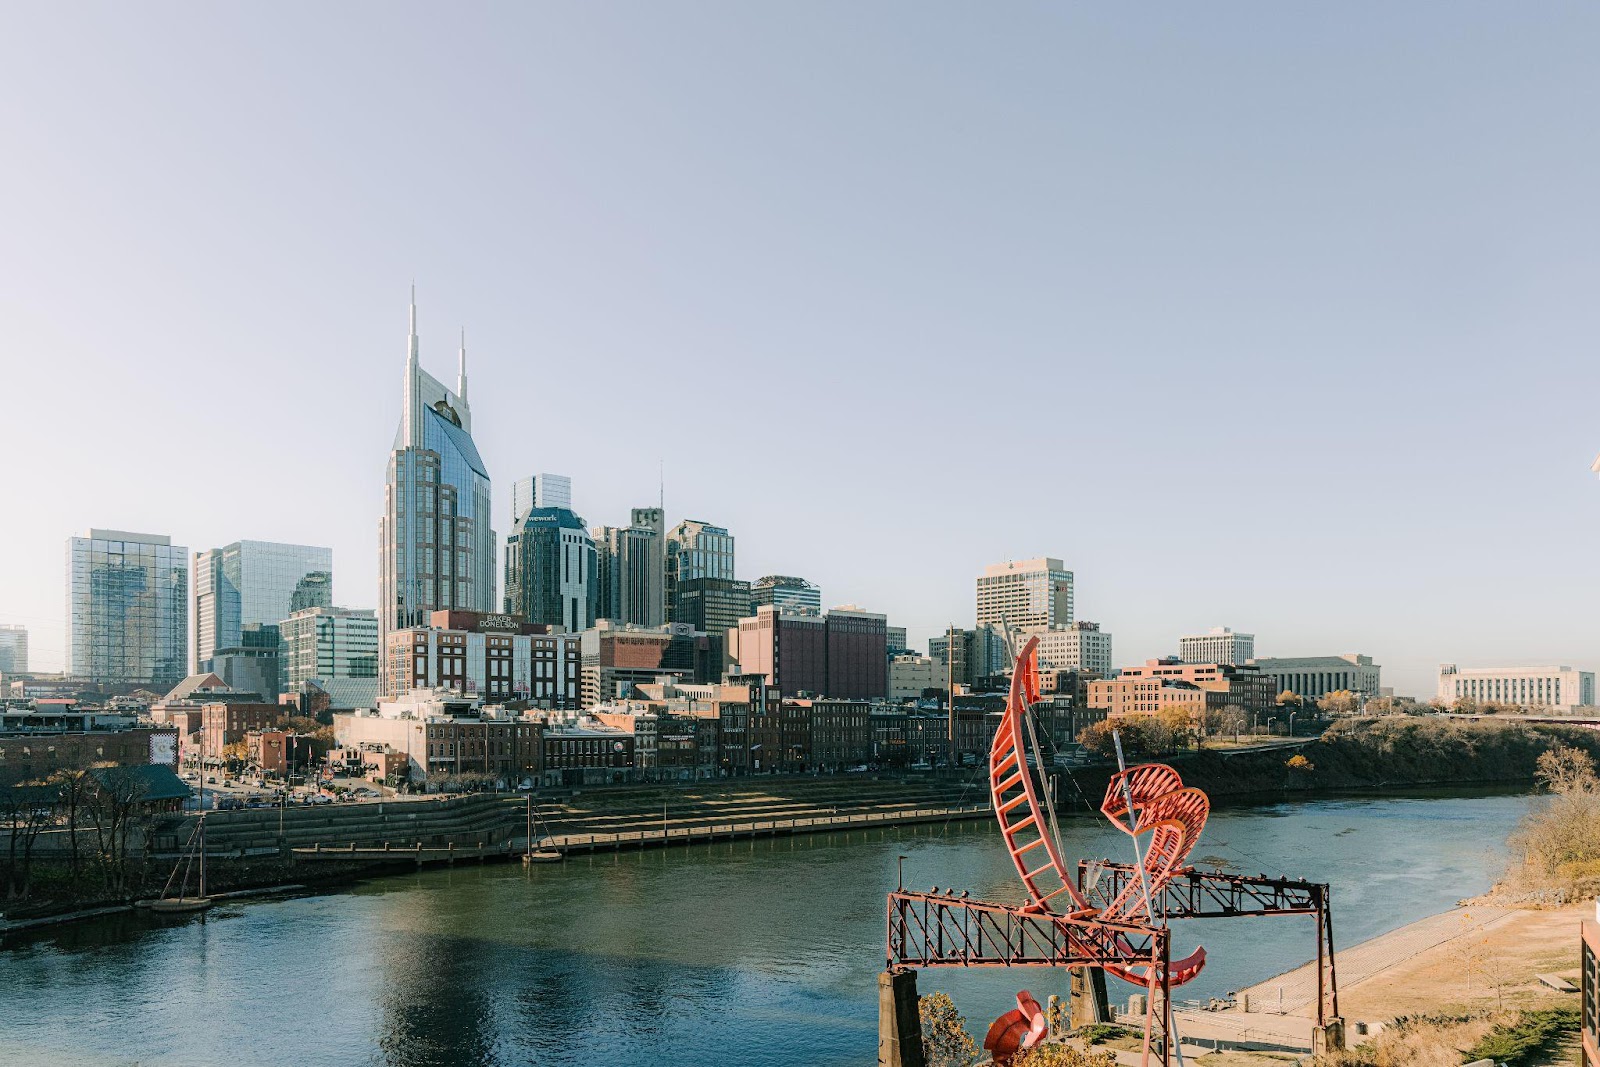 the skyline of Nashville